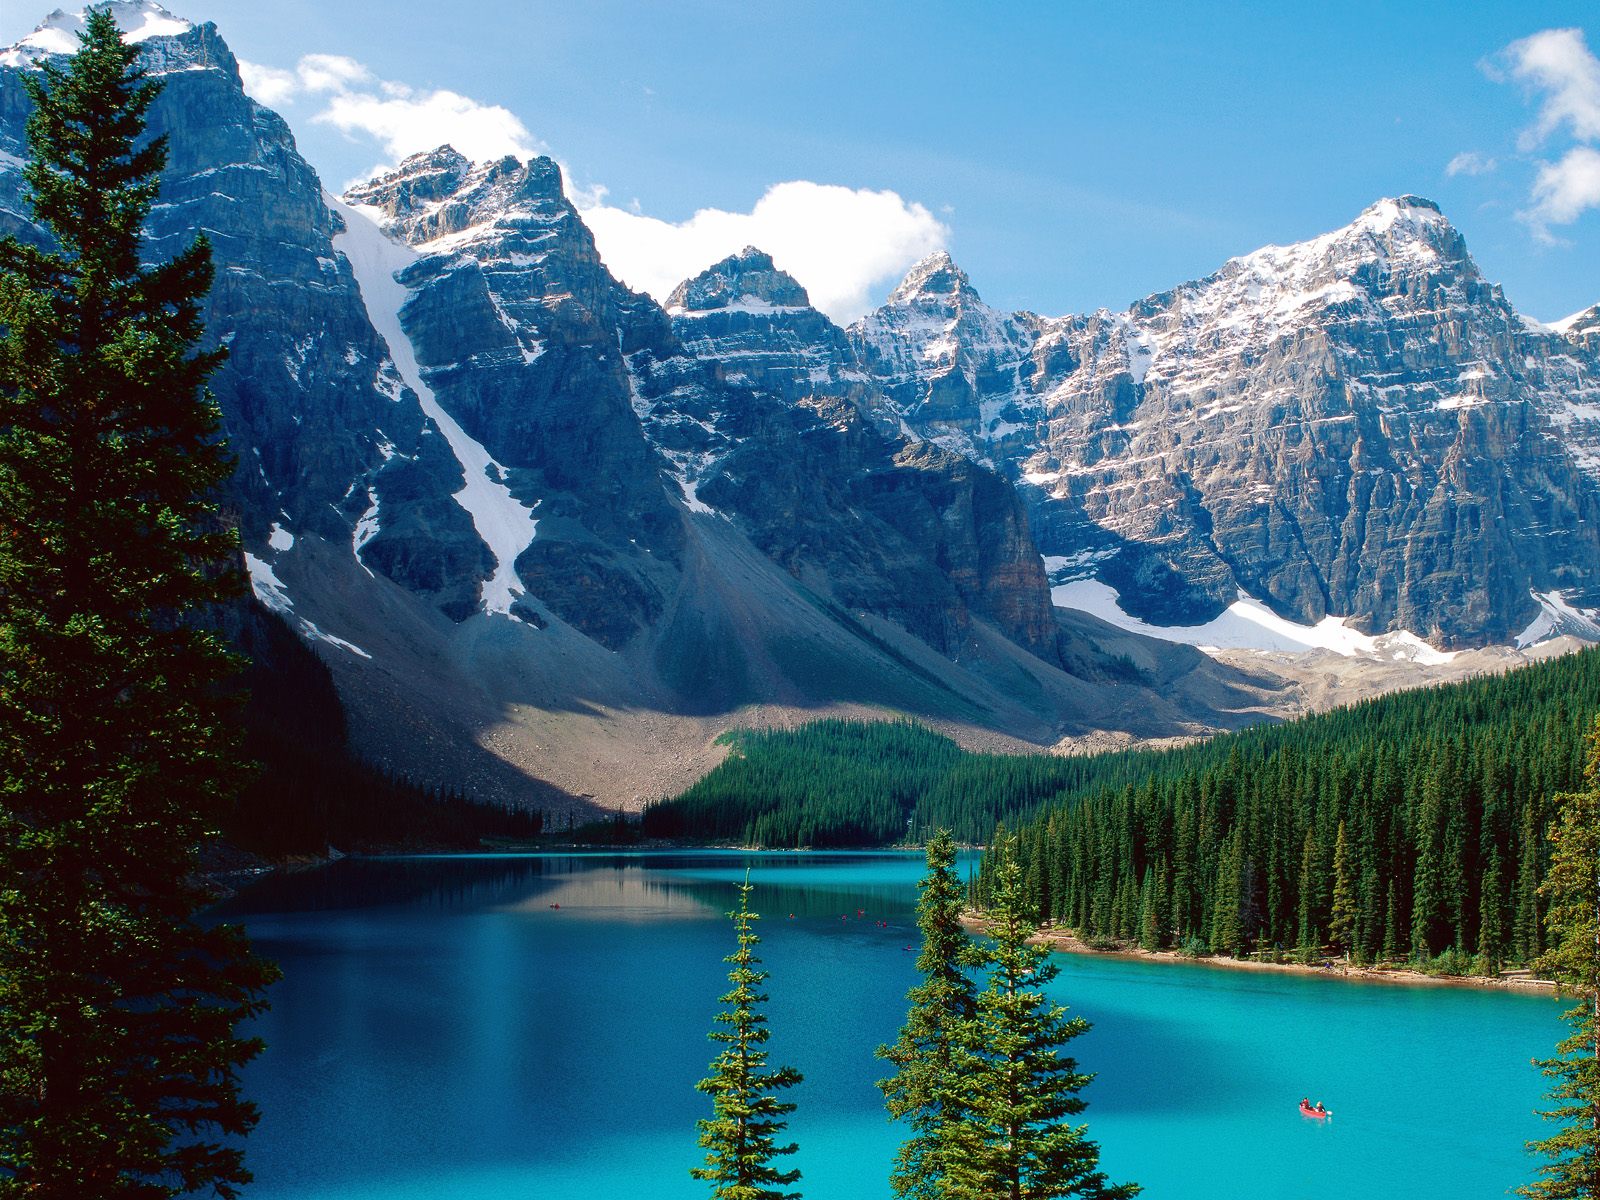 http://2.bp.blogspot.com/_HkbWdsz-H8g/S74FUOQBUjI/AAAAAAAAIkk/dWGtZHjRfLc/s1600/Moraine+Lake,+Banff+!%20%20National+Park,+Canada.jpg